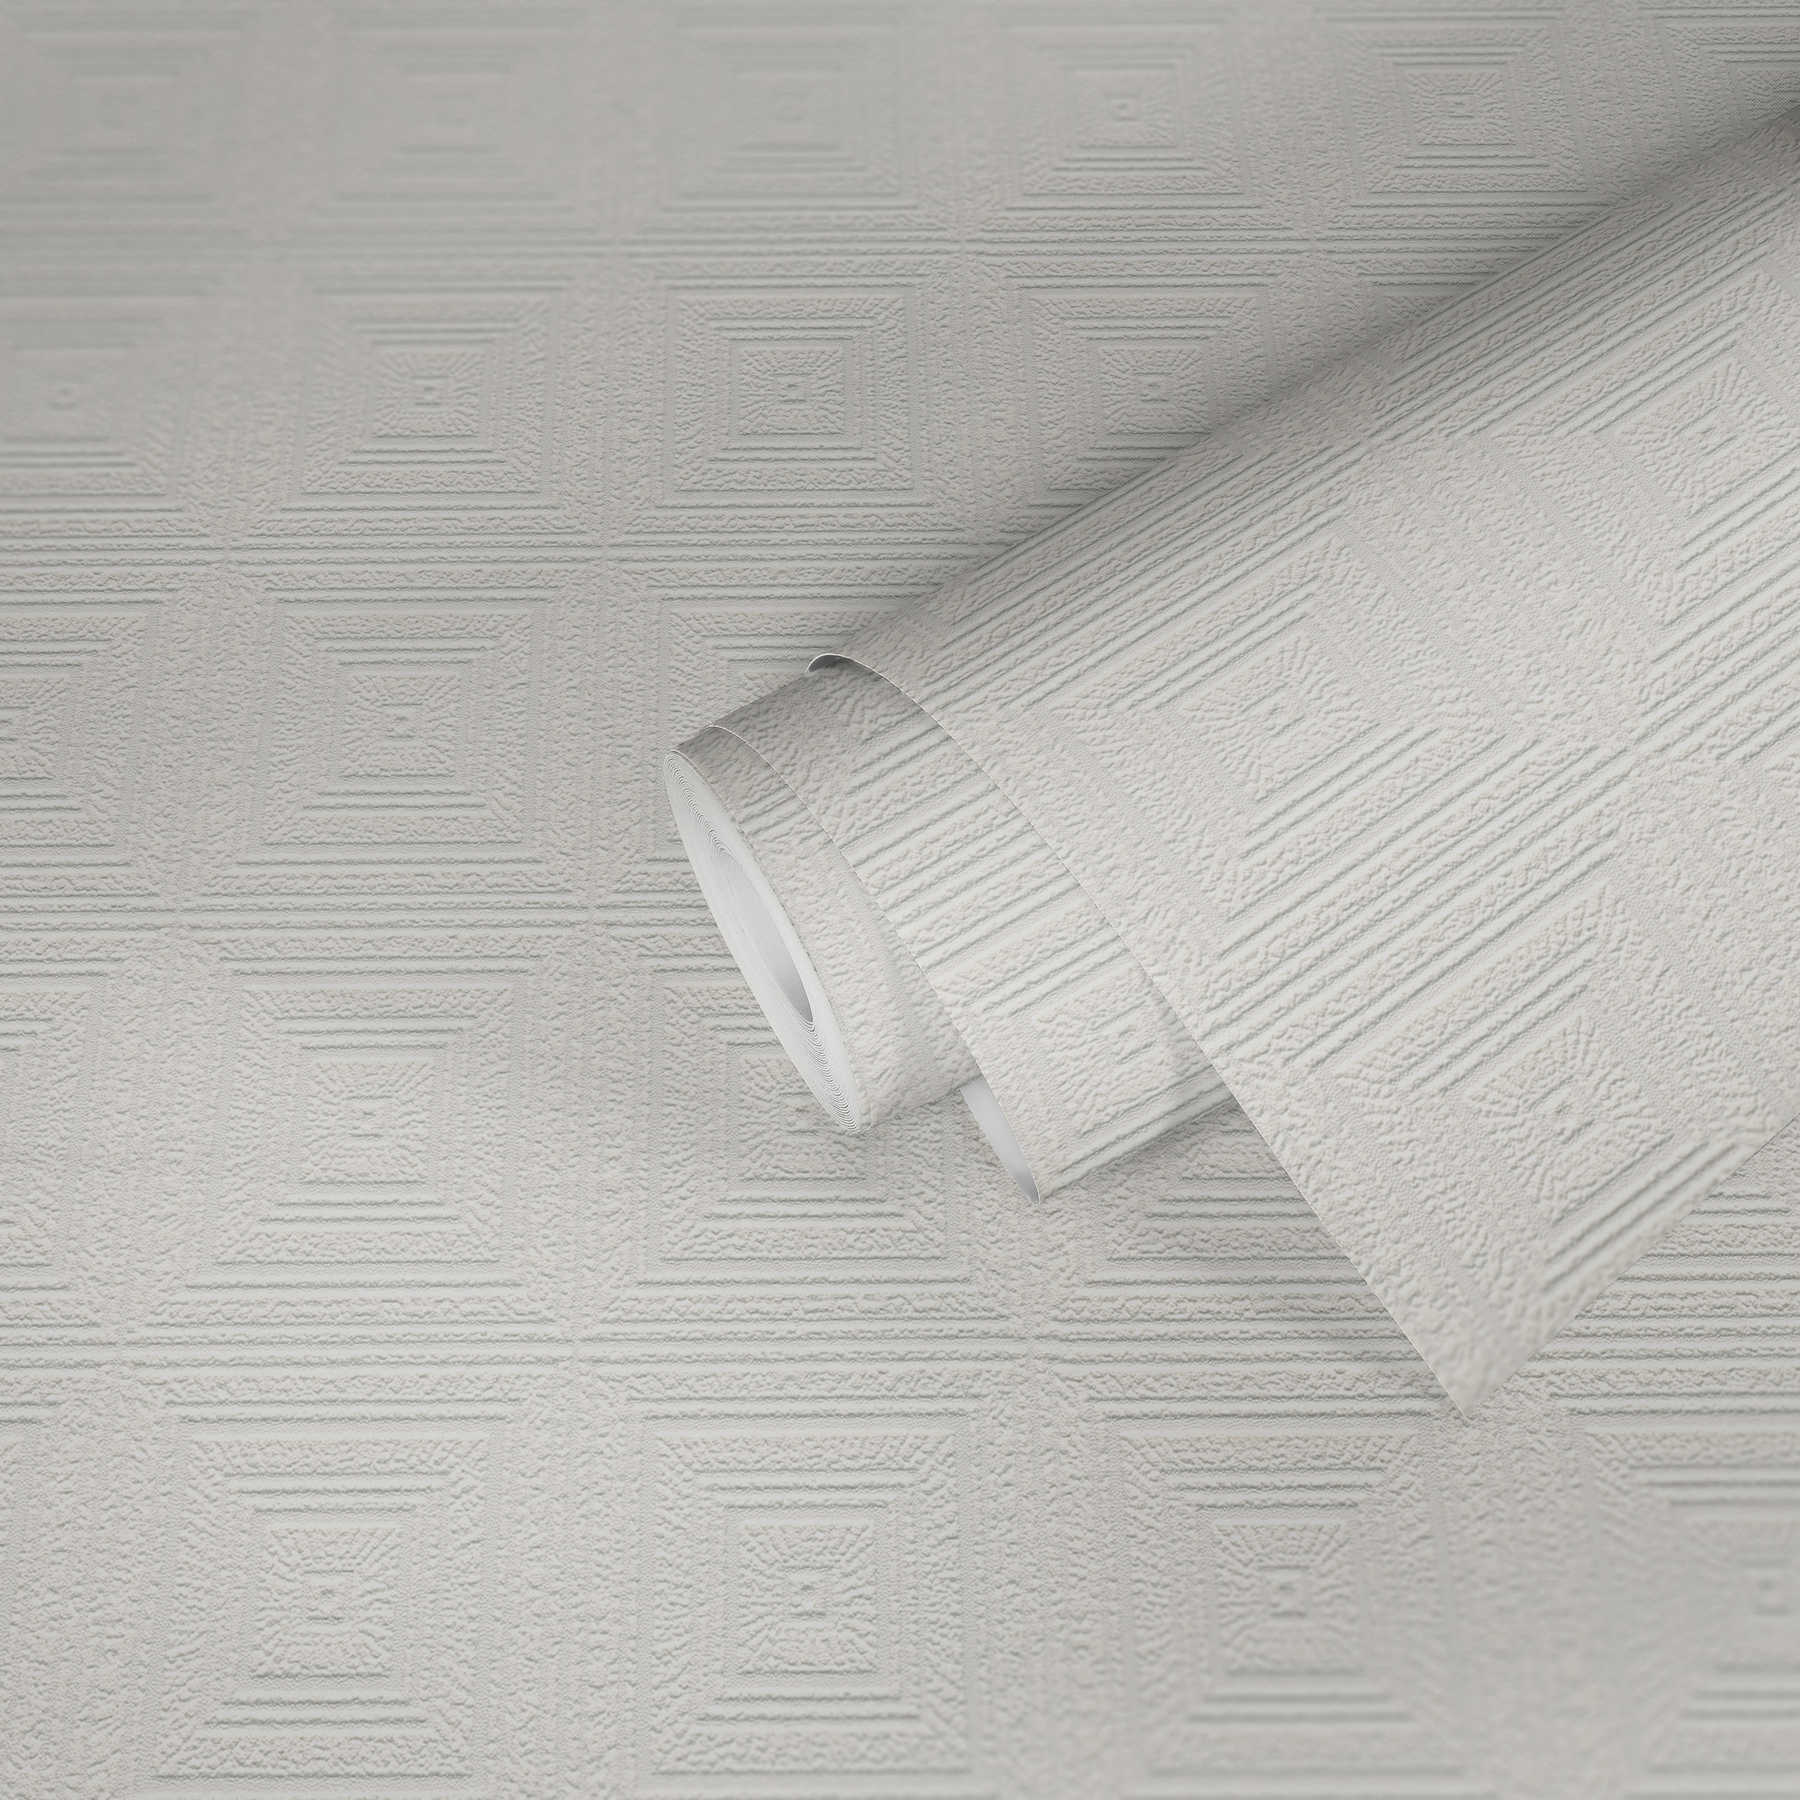             Paper wallpaper decor cassettes texture effect & plaster look - white
        